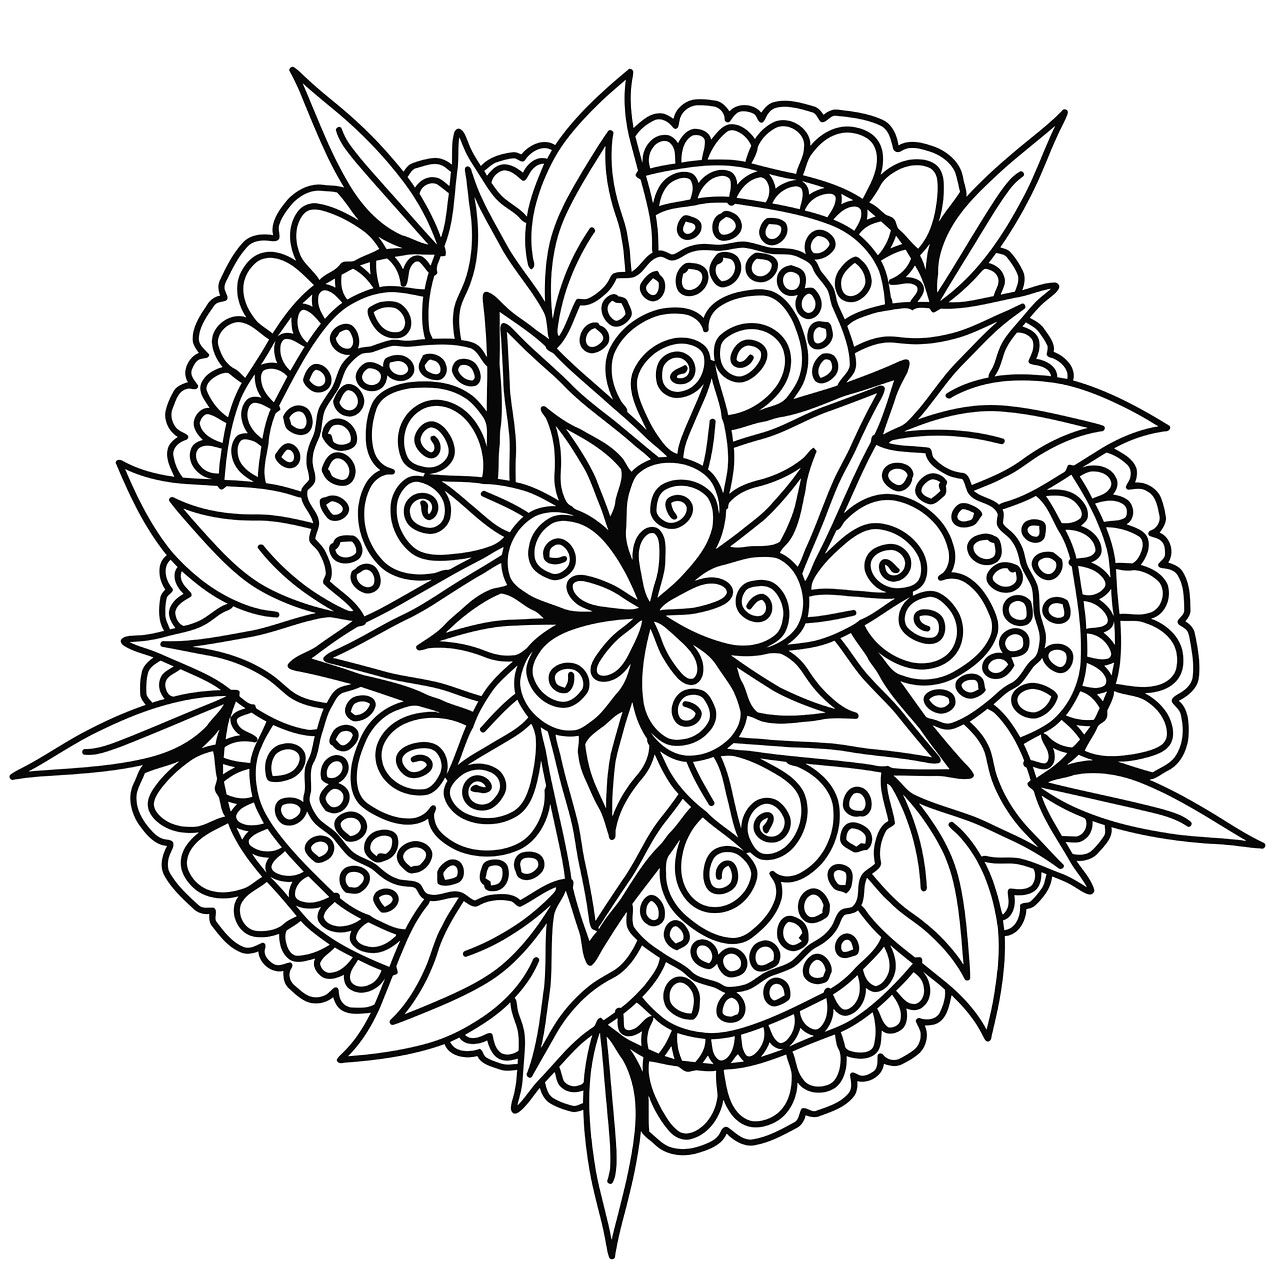 Impresionante mandala dibujado a mano - Mandalas - Colorear para Adultos